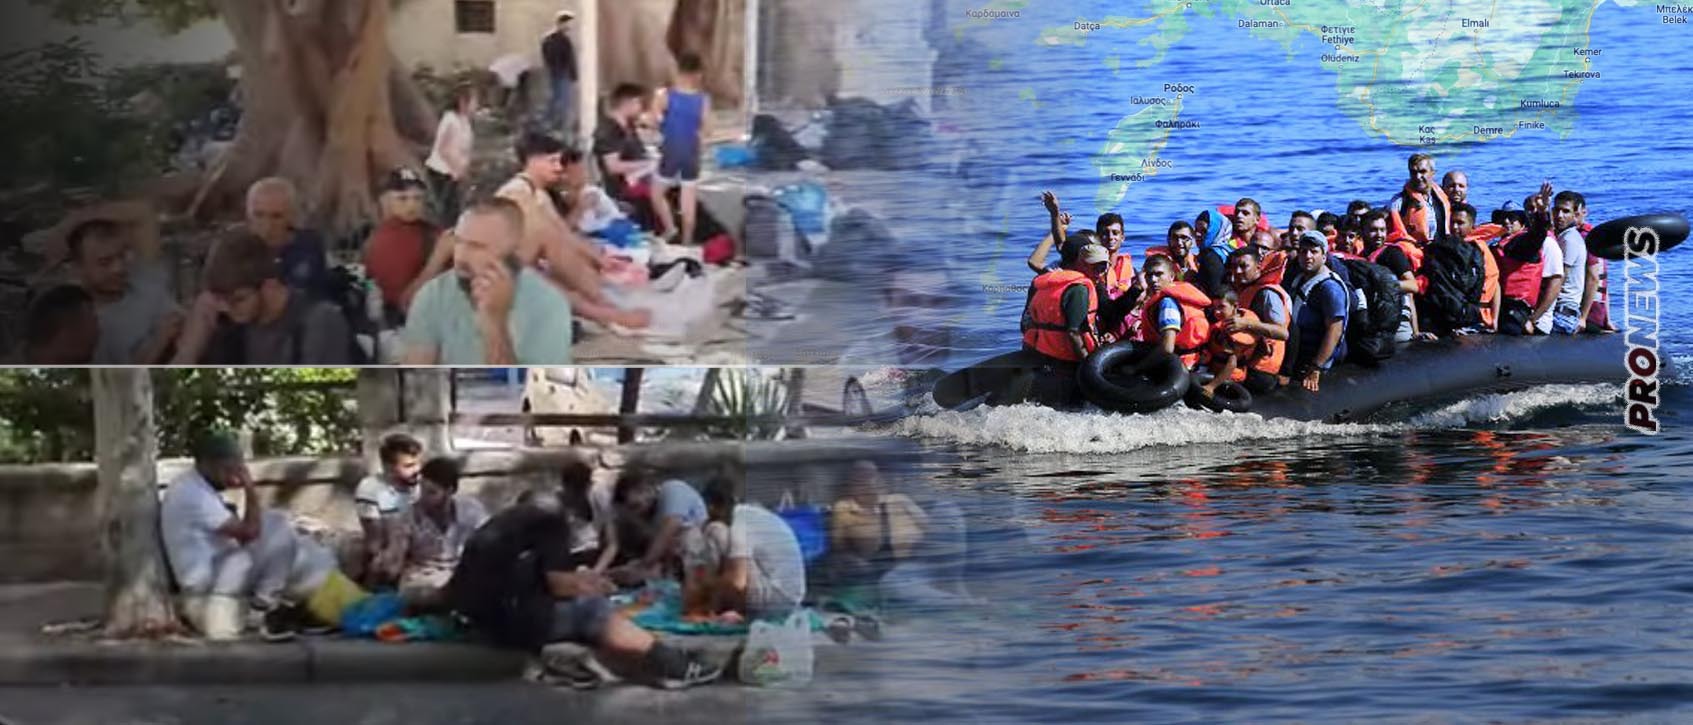 Bίντεο-σοκ: Χιλιάδες παράνομοι αλλοδαποί έχουν κατακλύσει το κέντρο της πόλης της Ρόδου μετατρέποντάς το σε «hot spot»!